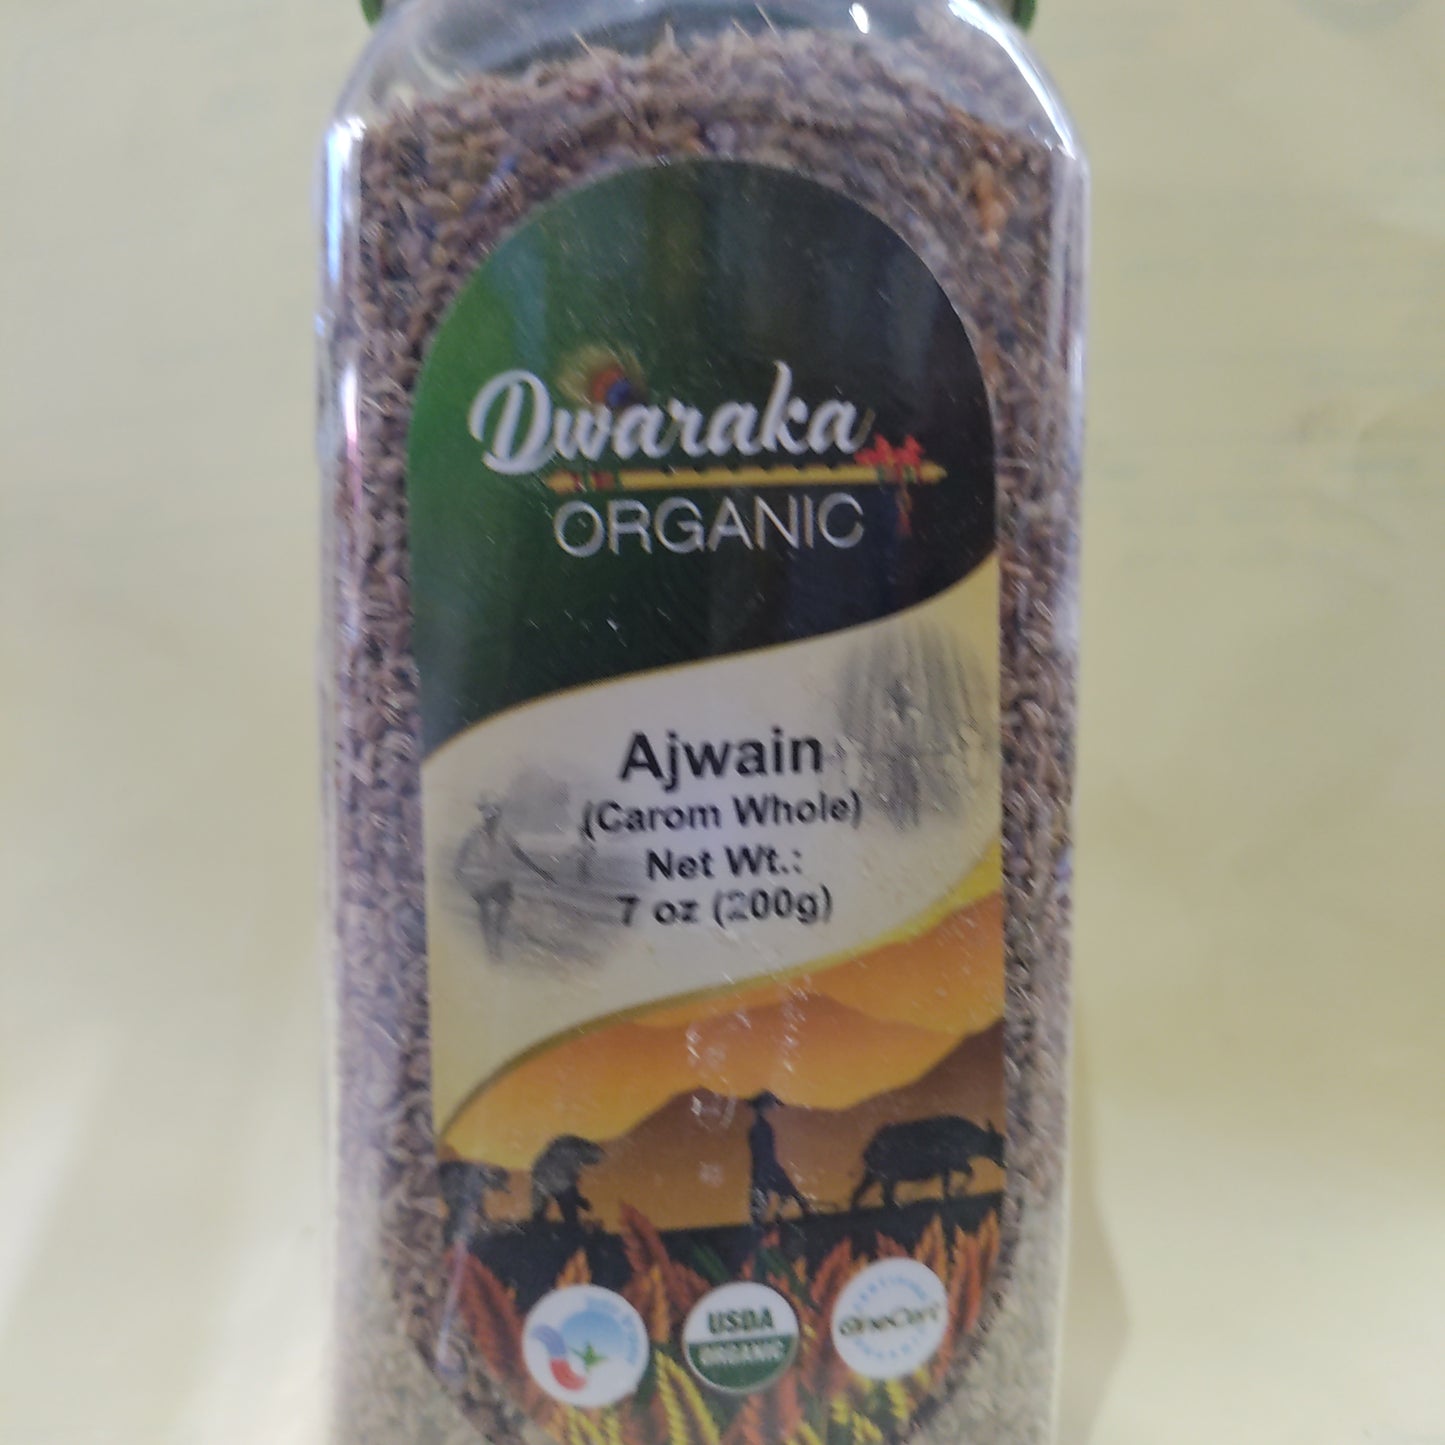 Dwaraka organic ajwain 7 ozs